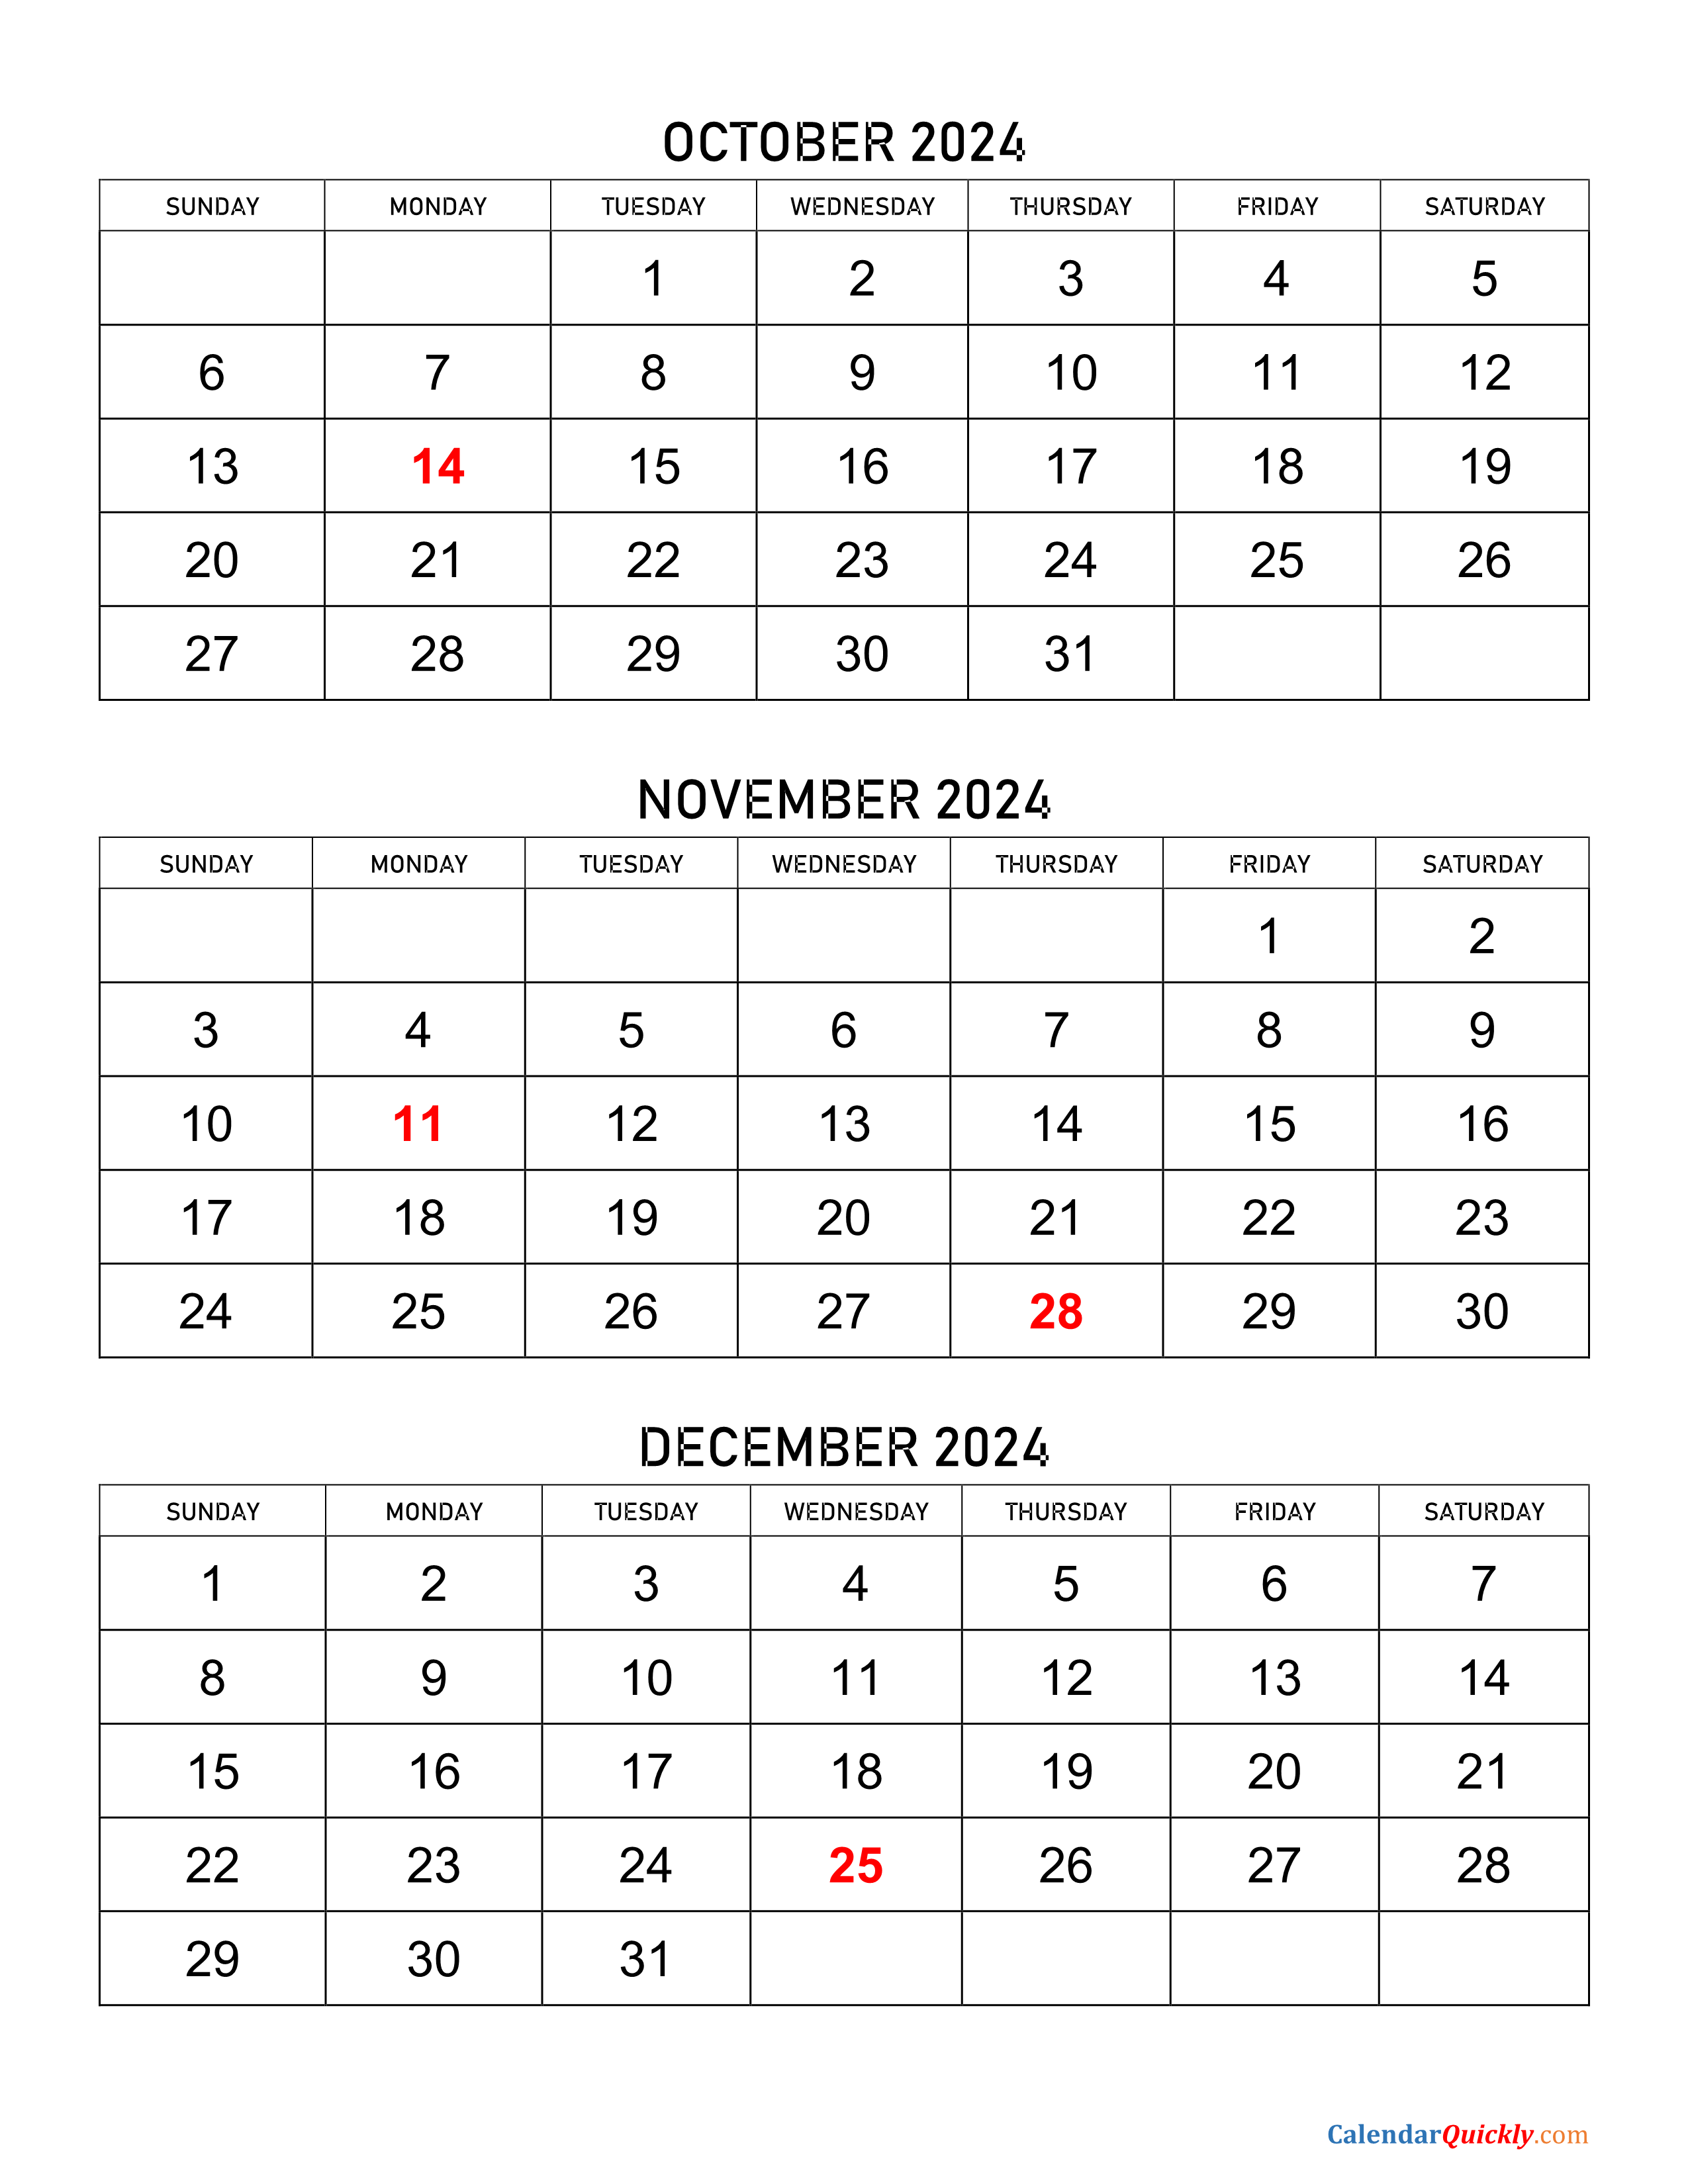 2024 October November December Calendar Printable 2024 CALENDAR PRINTABLE - Free Printable 2024 December Calender